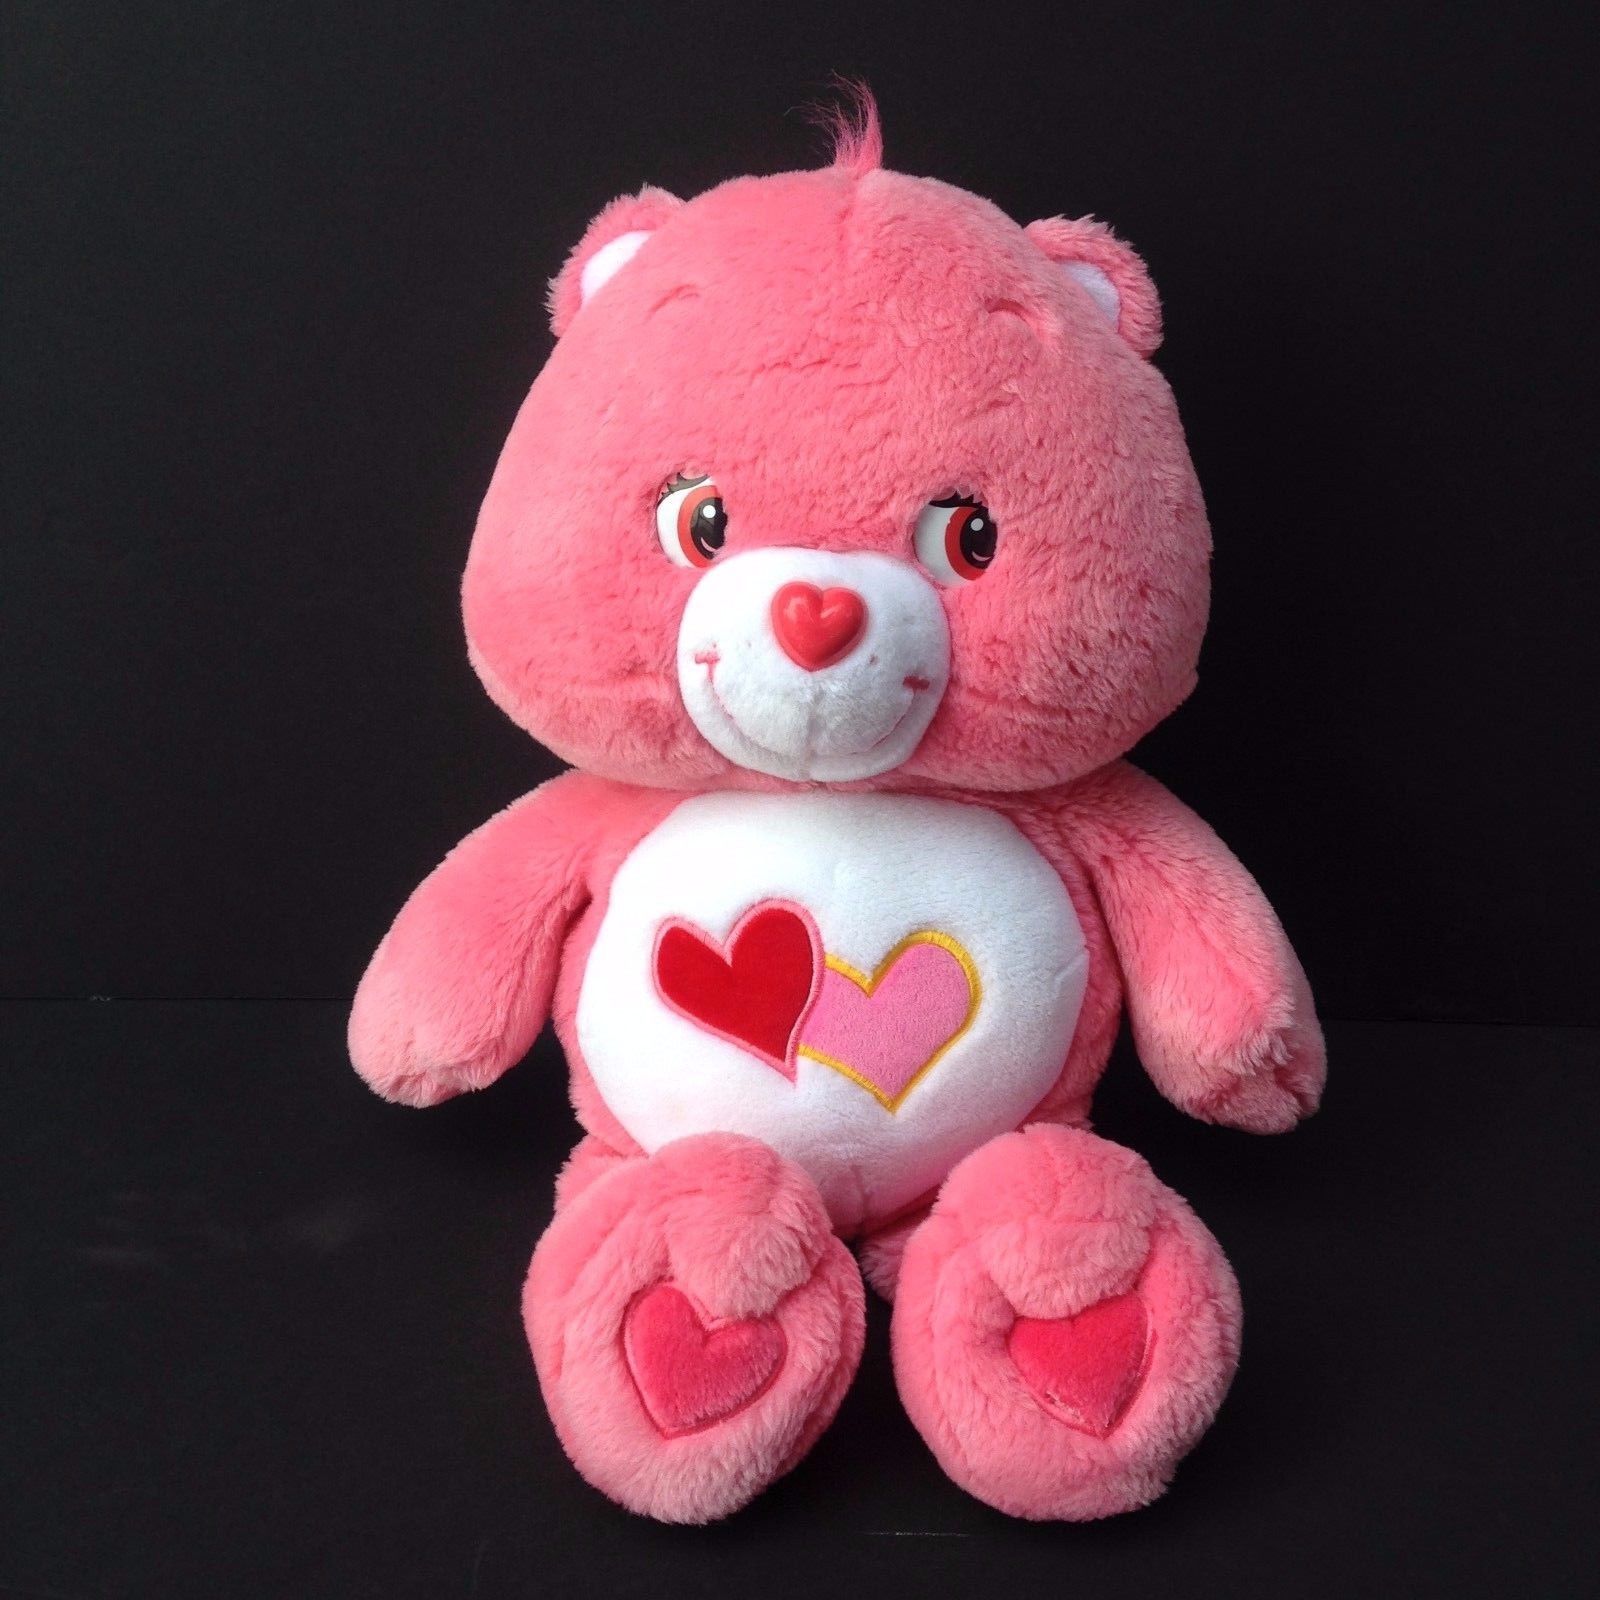 Jumbo Care Bear Love-a-Lot 21 in. Stuffed Plush Animal 2003 Pink Hearts-Preowned